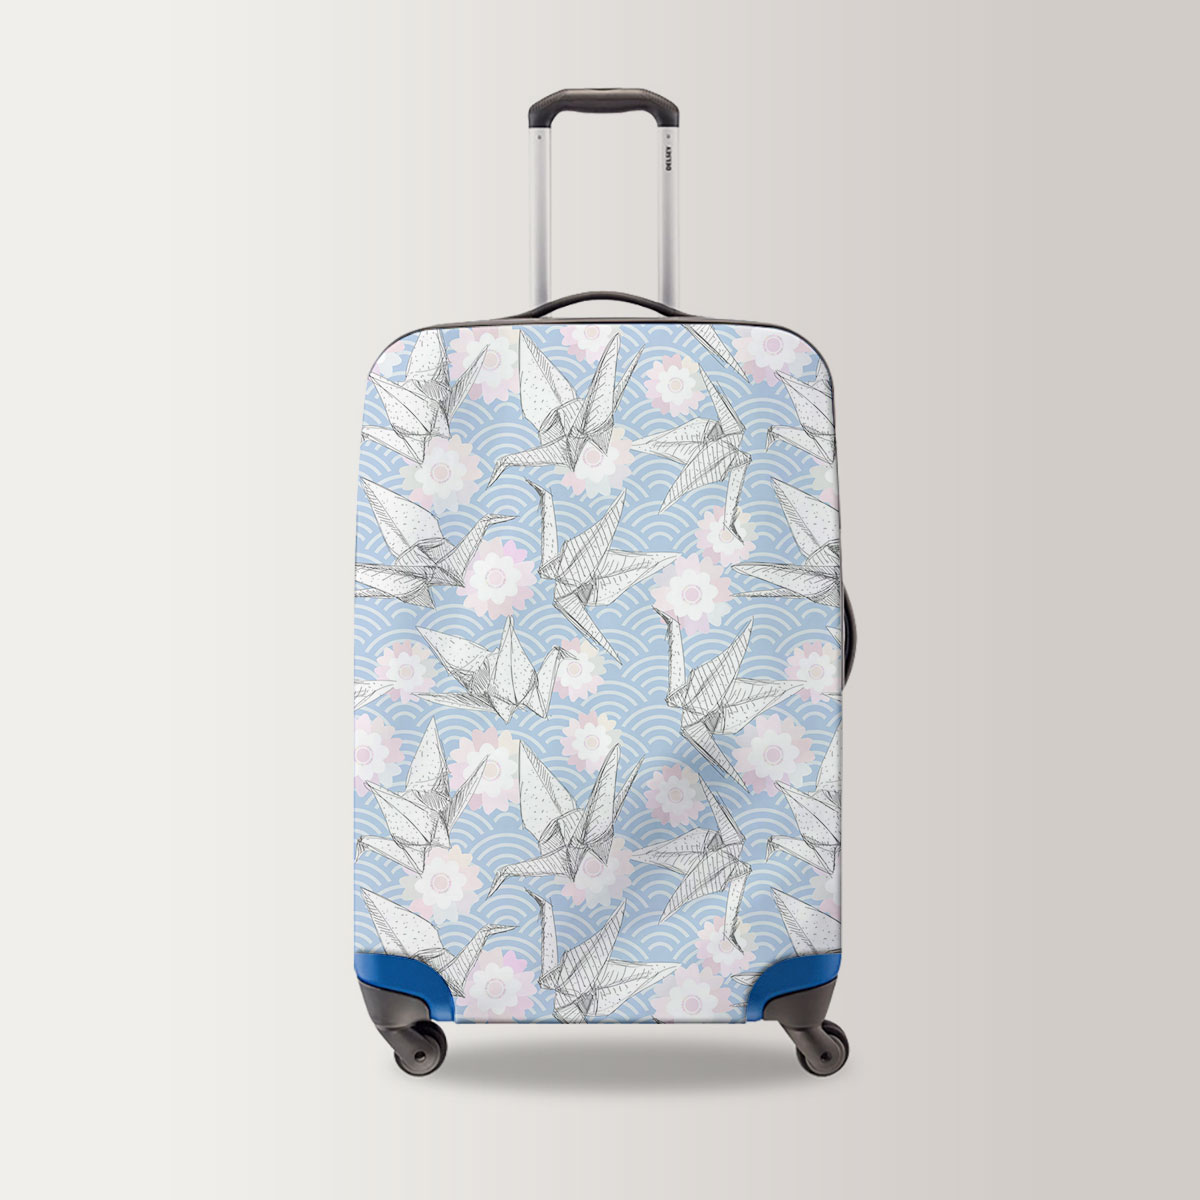 White Origami Paper Crane Luggage Bag